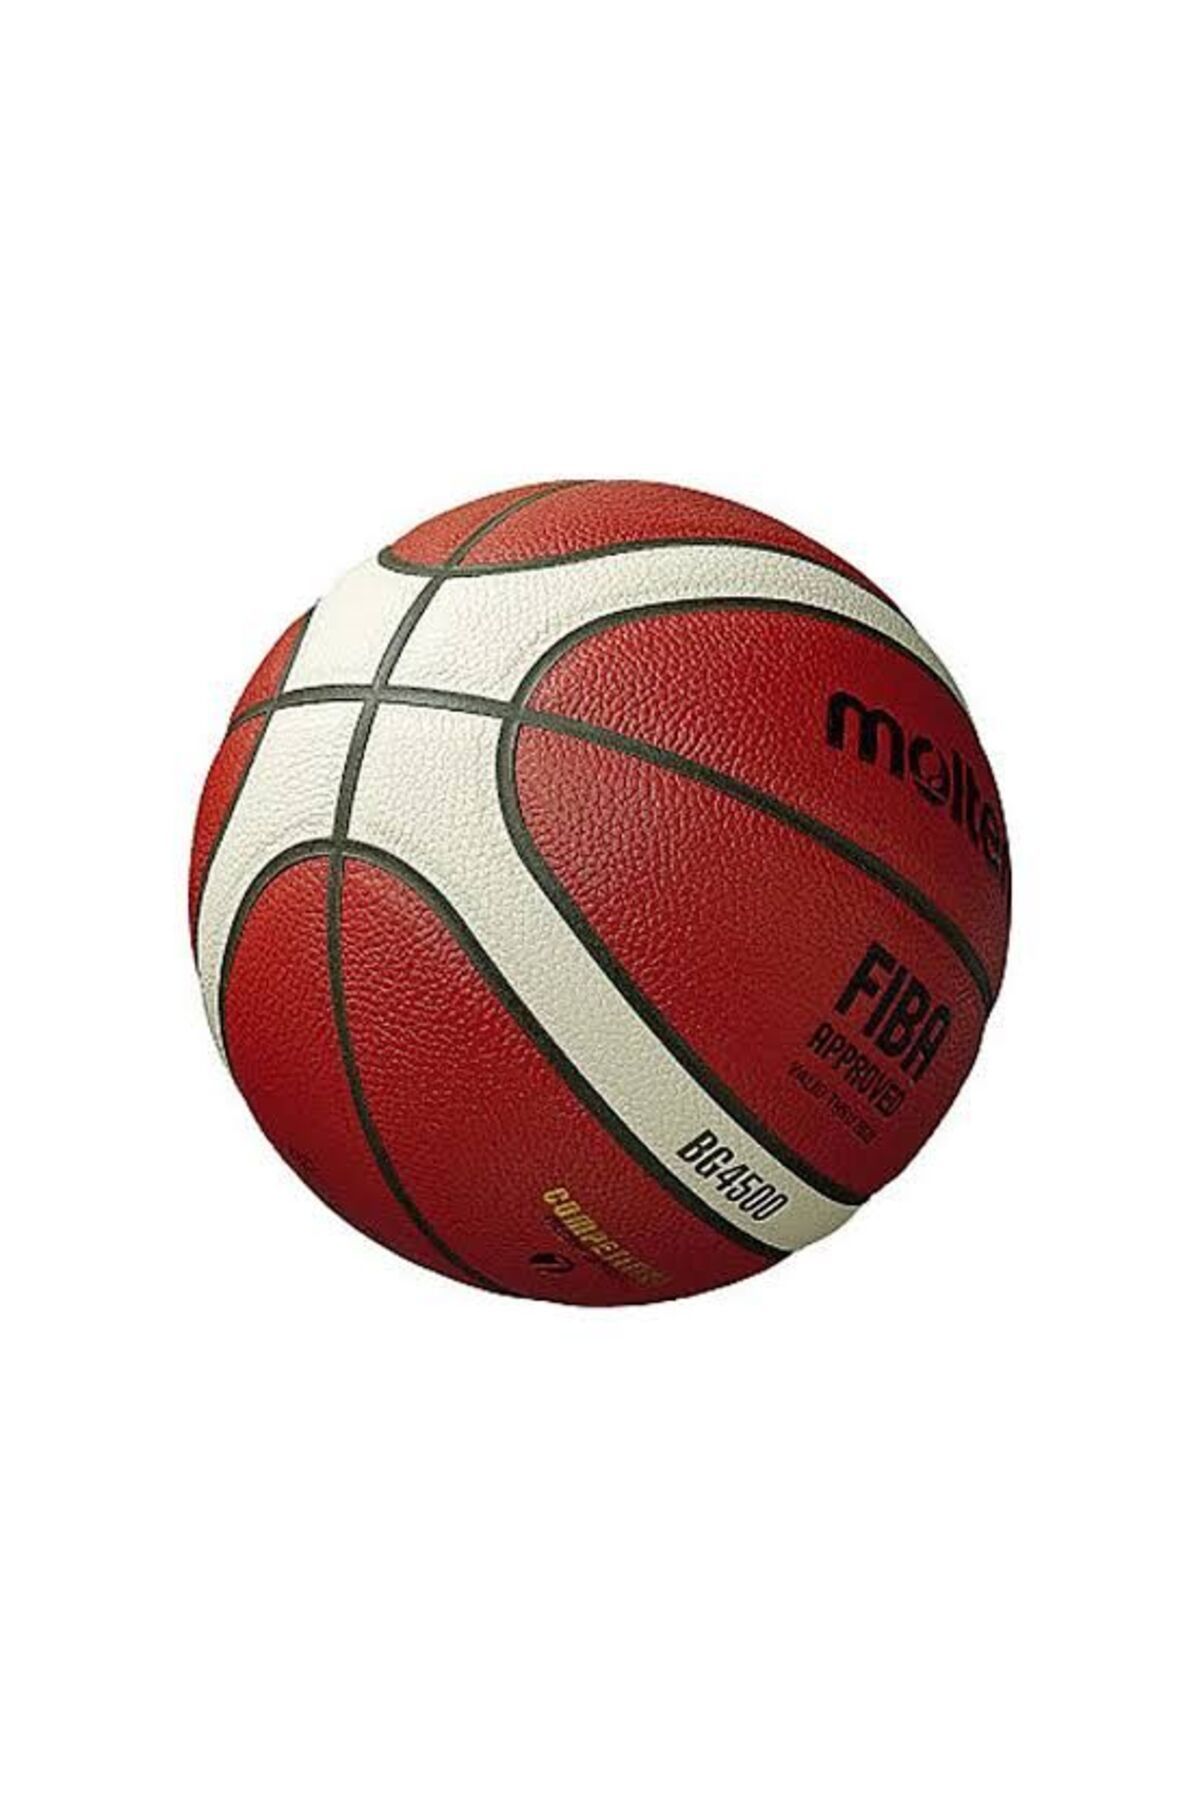 Molten FIBA ONAYLI MOLTEN BG 4500 BASKETBOL TOPU 7 Numara